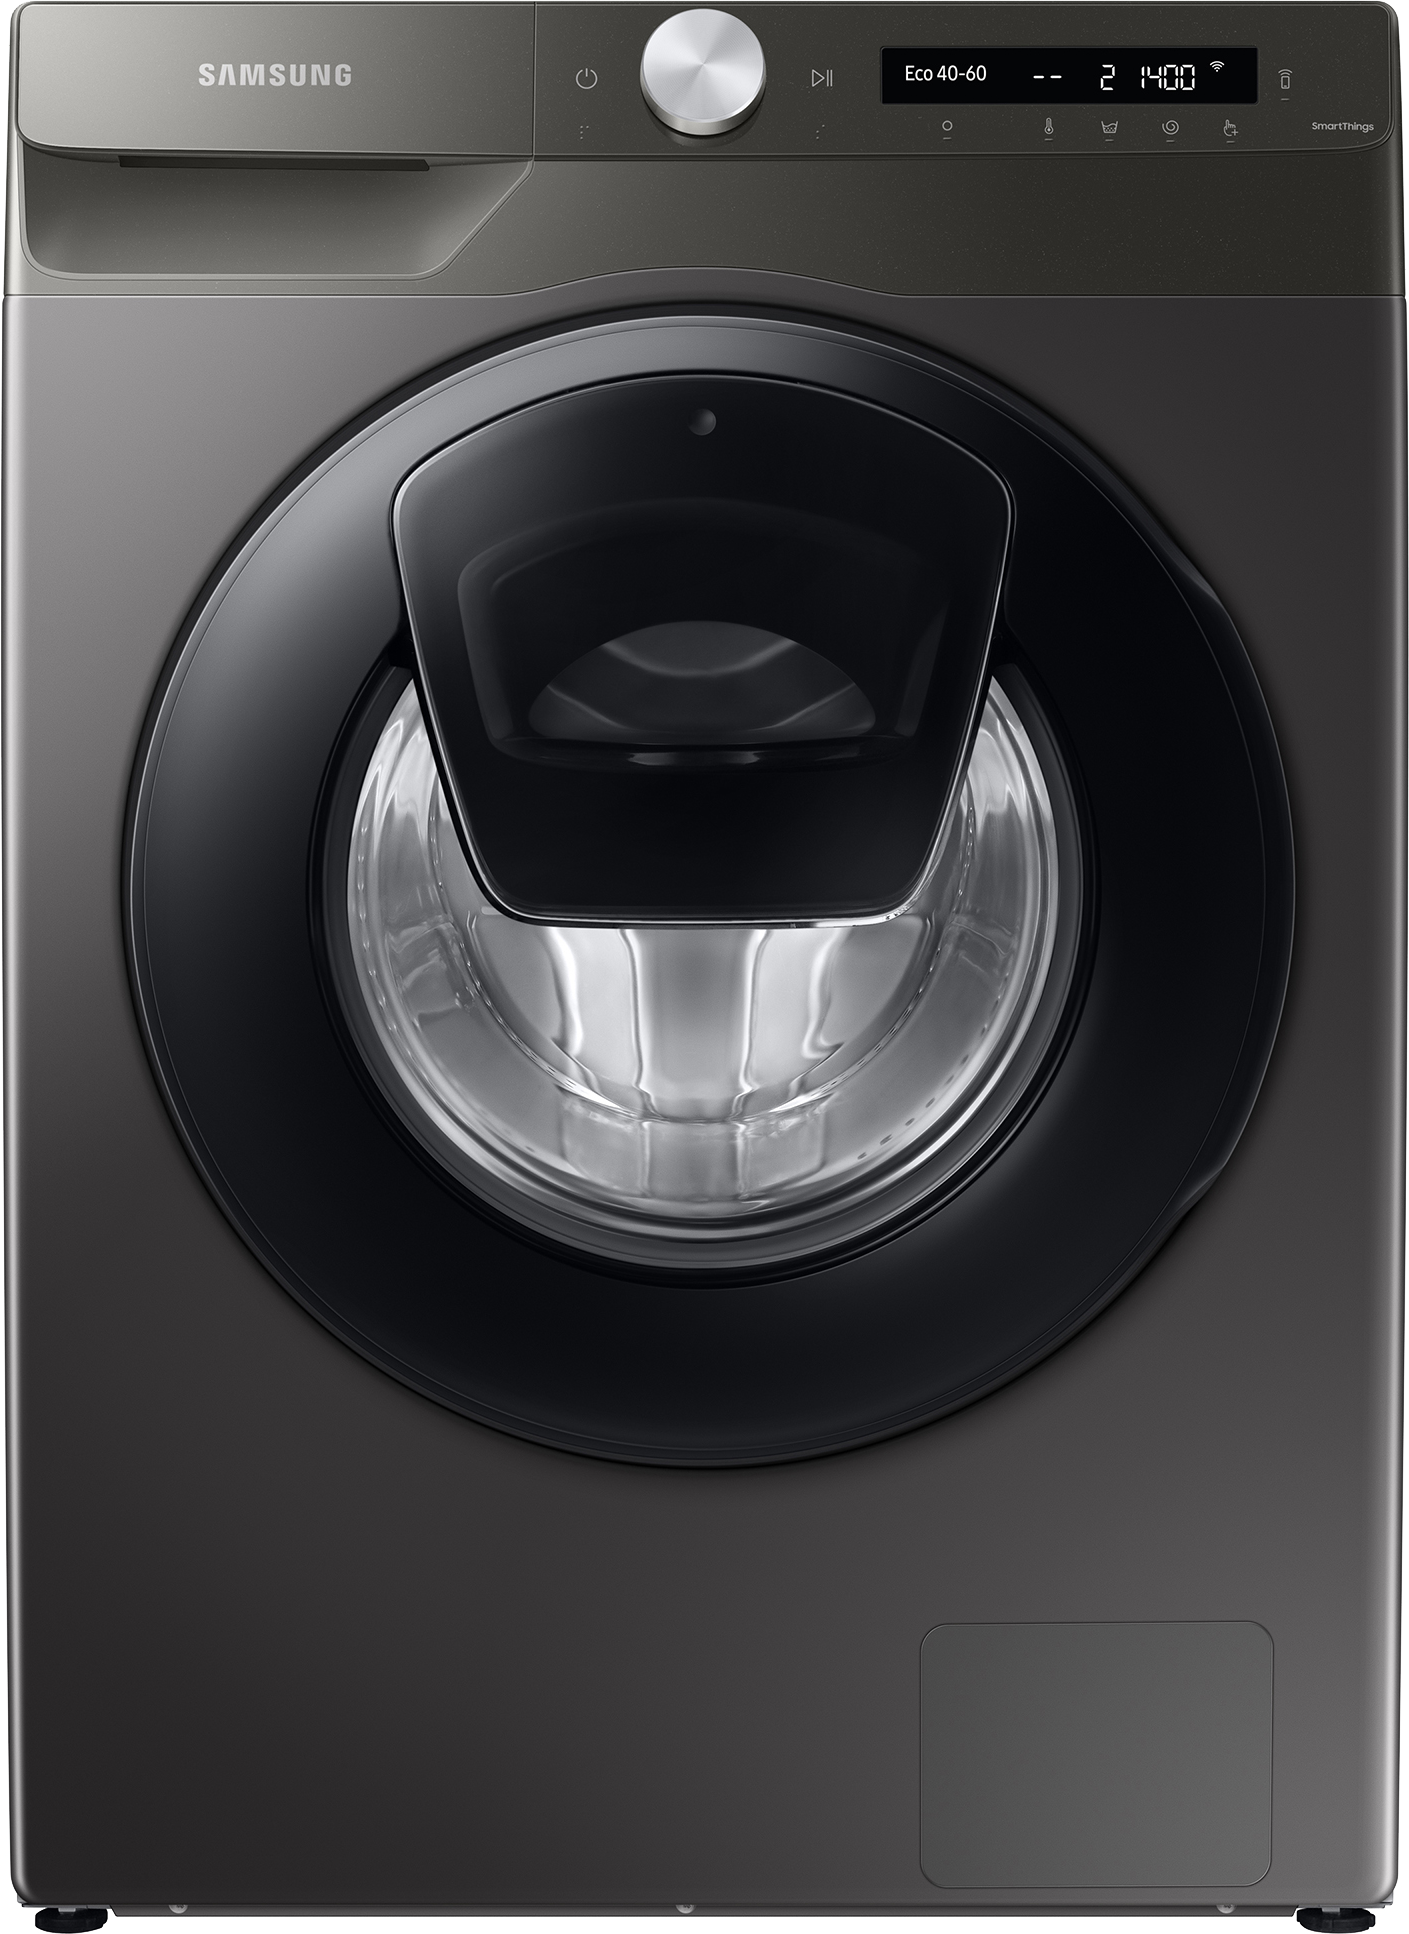 Samsung Series 6 AddWash WW80T554DAN 8kg Washing Machine with 1400 rpm - Graphite - B Rated, Silver